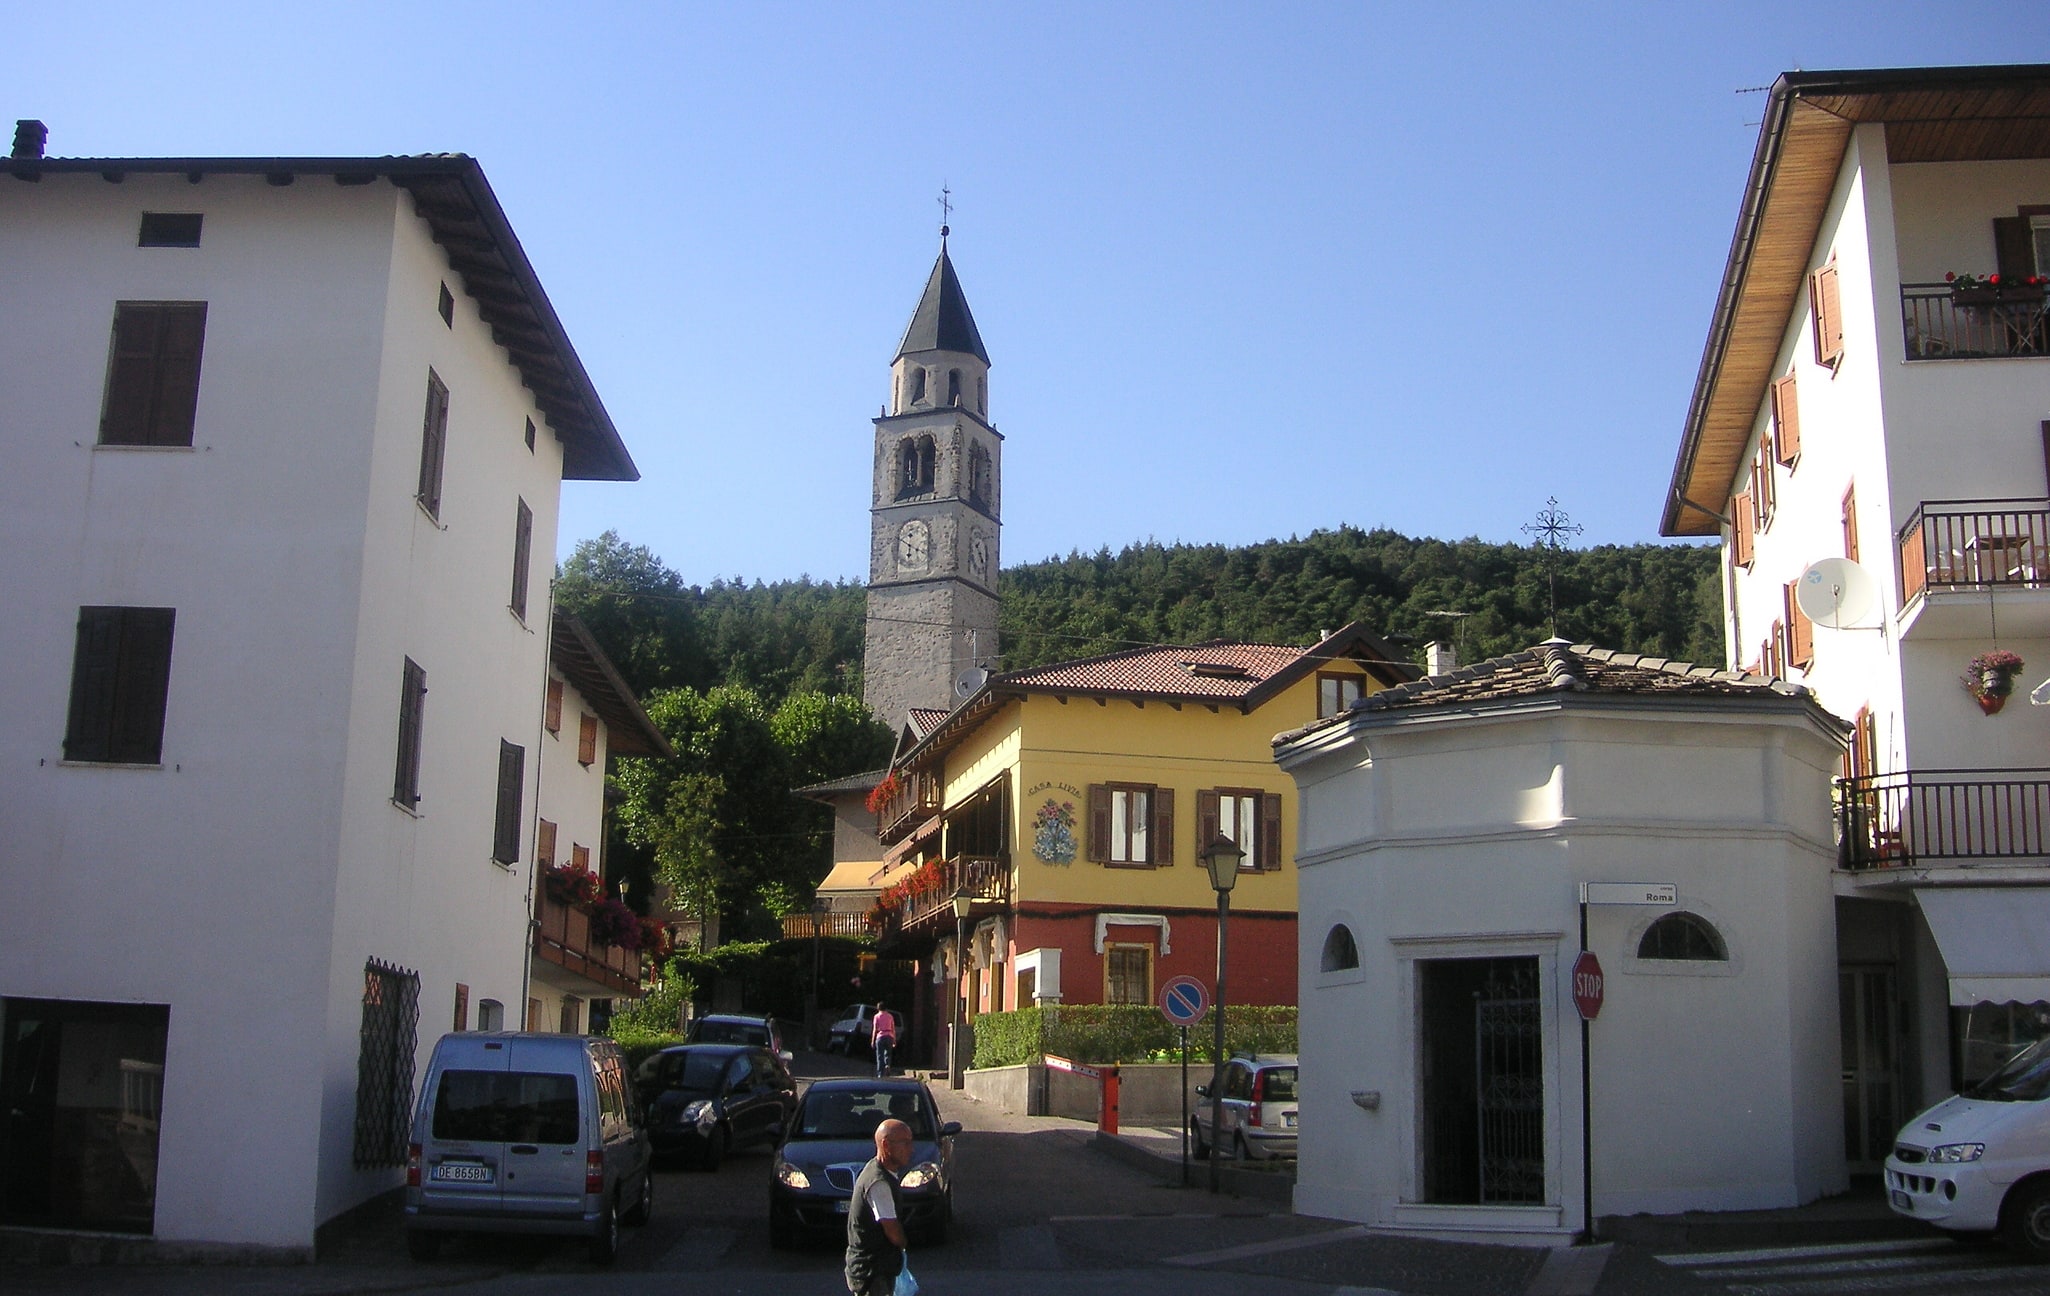 Baselga di Pinè, Italy